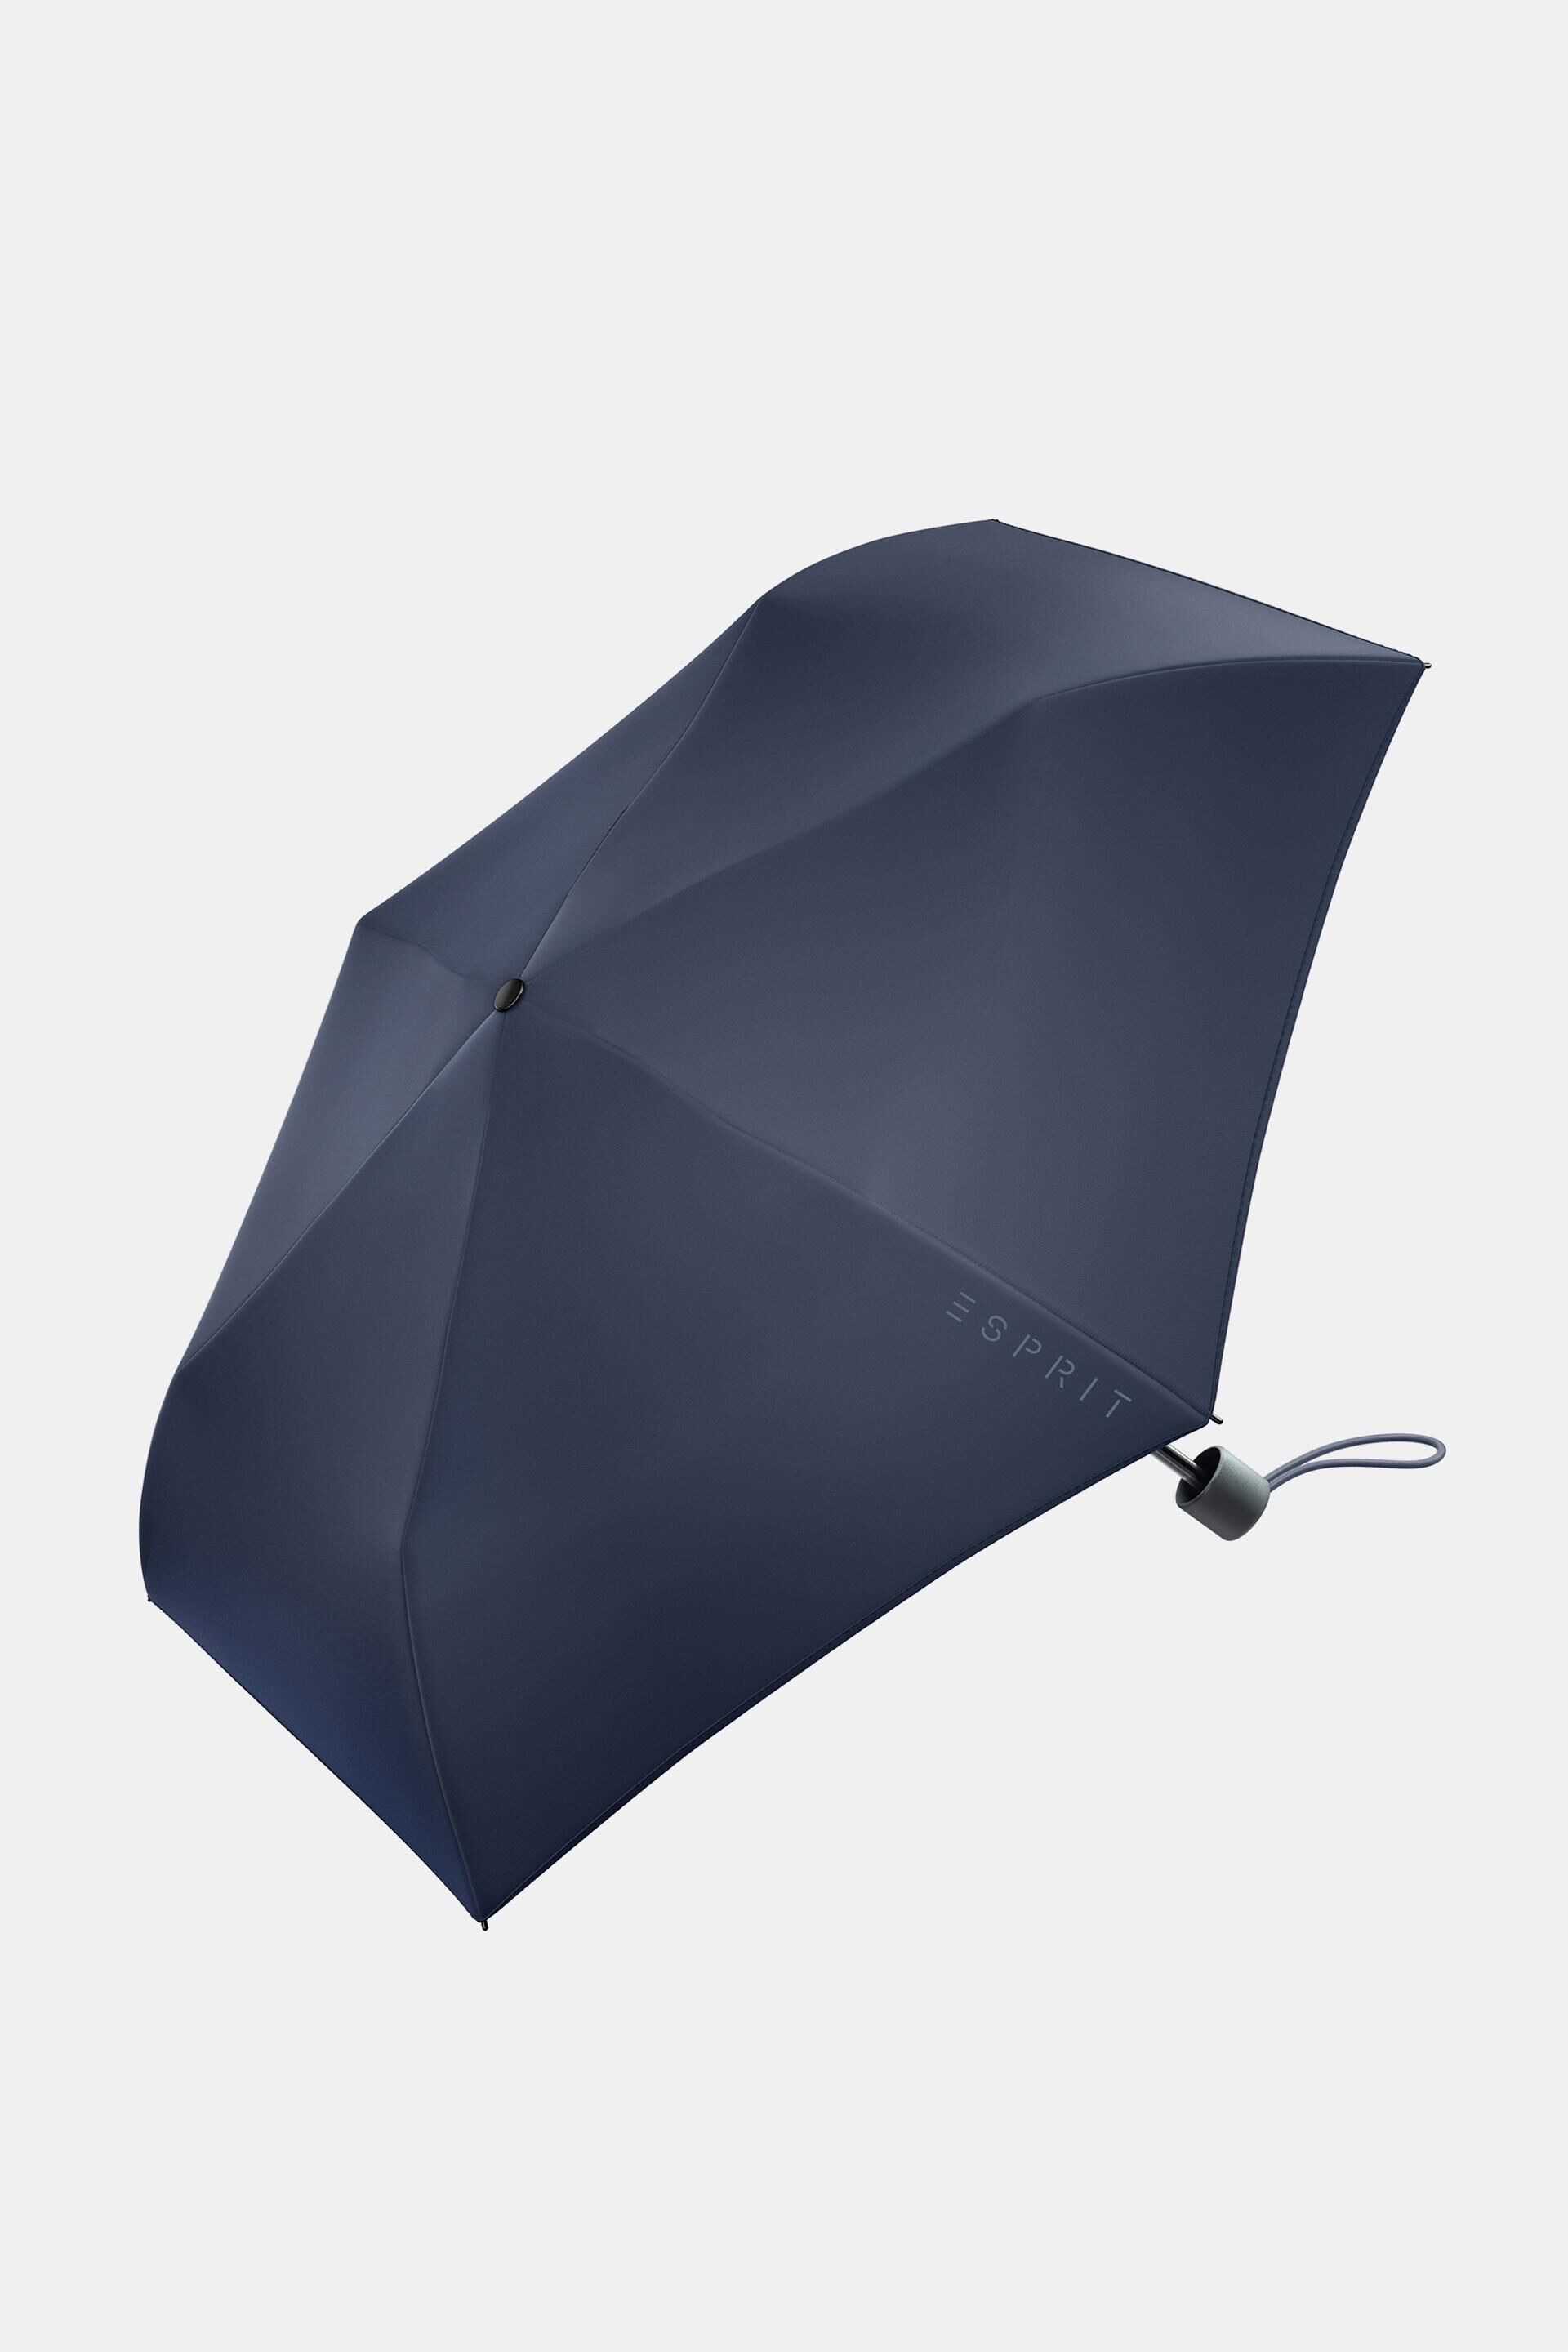 Esprit Online Store Pocket umbrella in navy blue with logo print